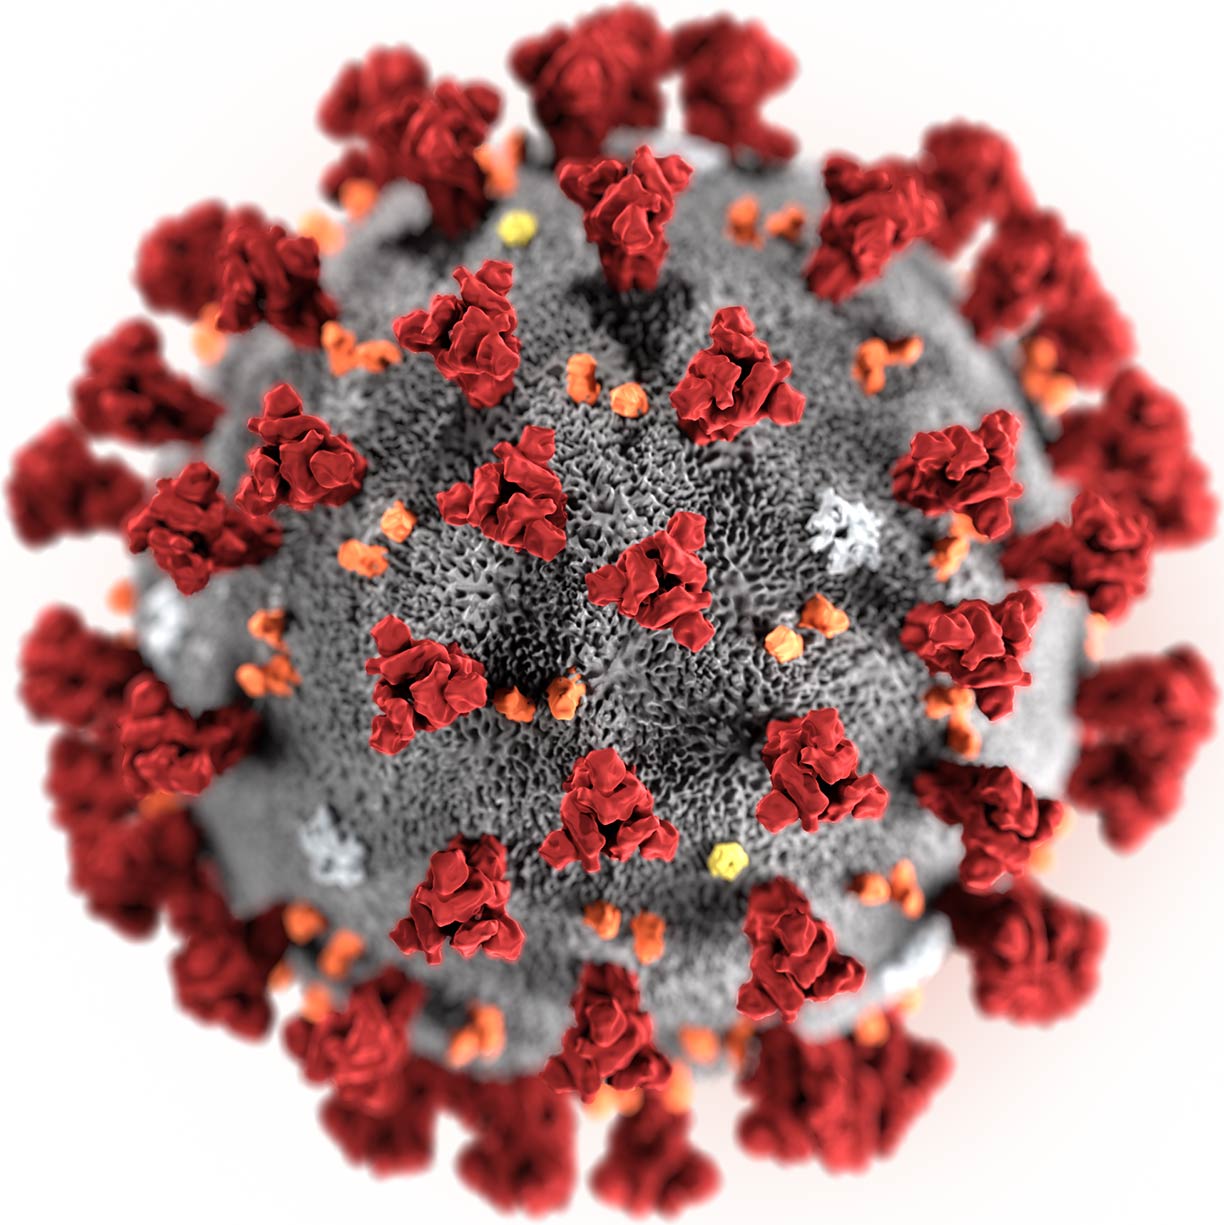 Rendered image of the 2019 Novel Coronavirus (2019-nCoV)